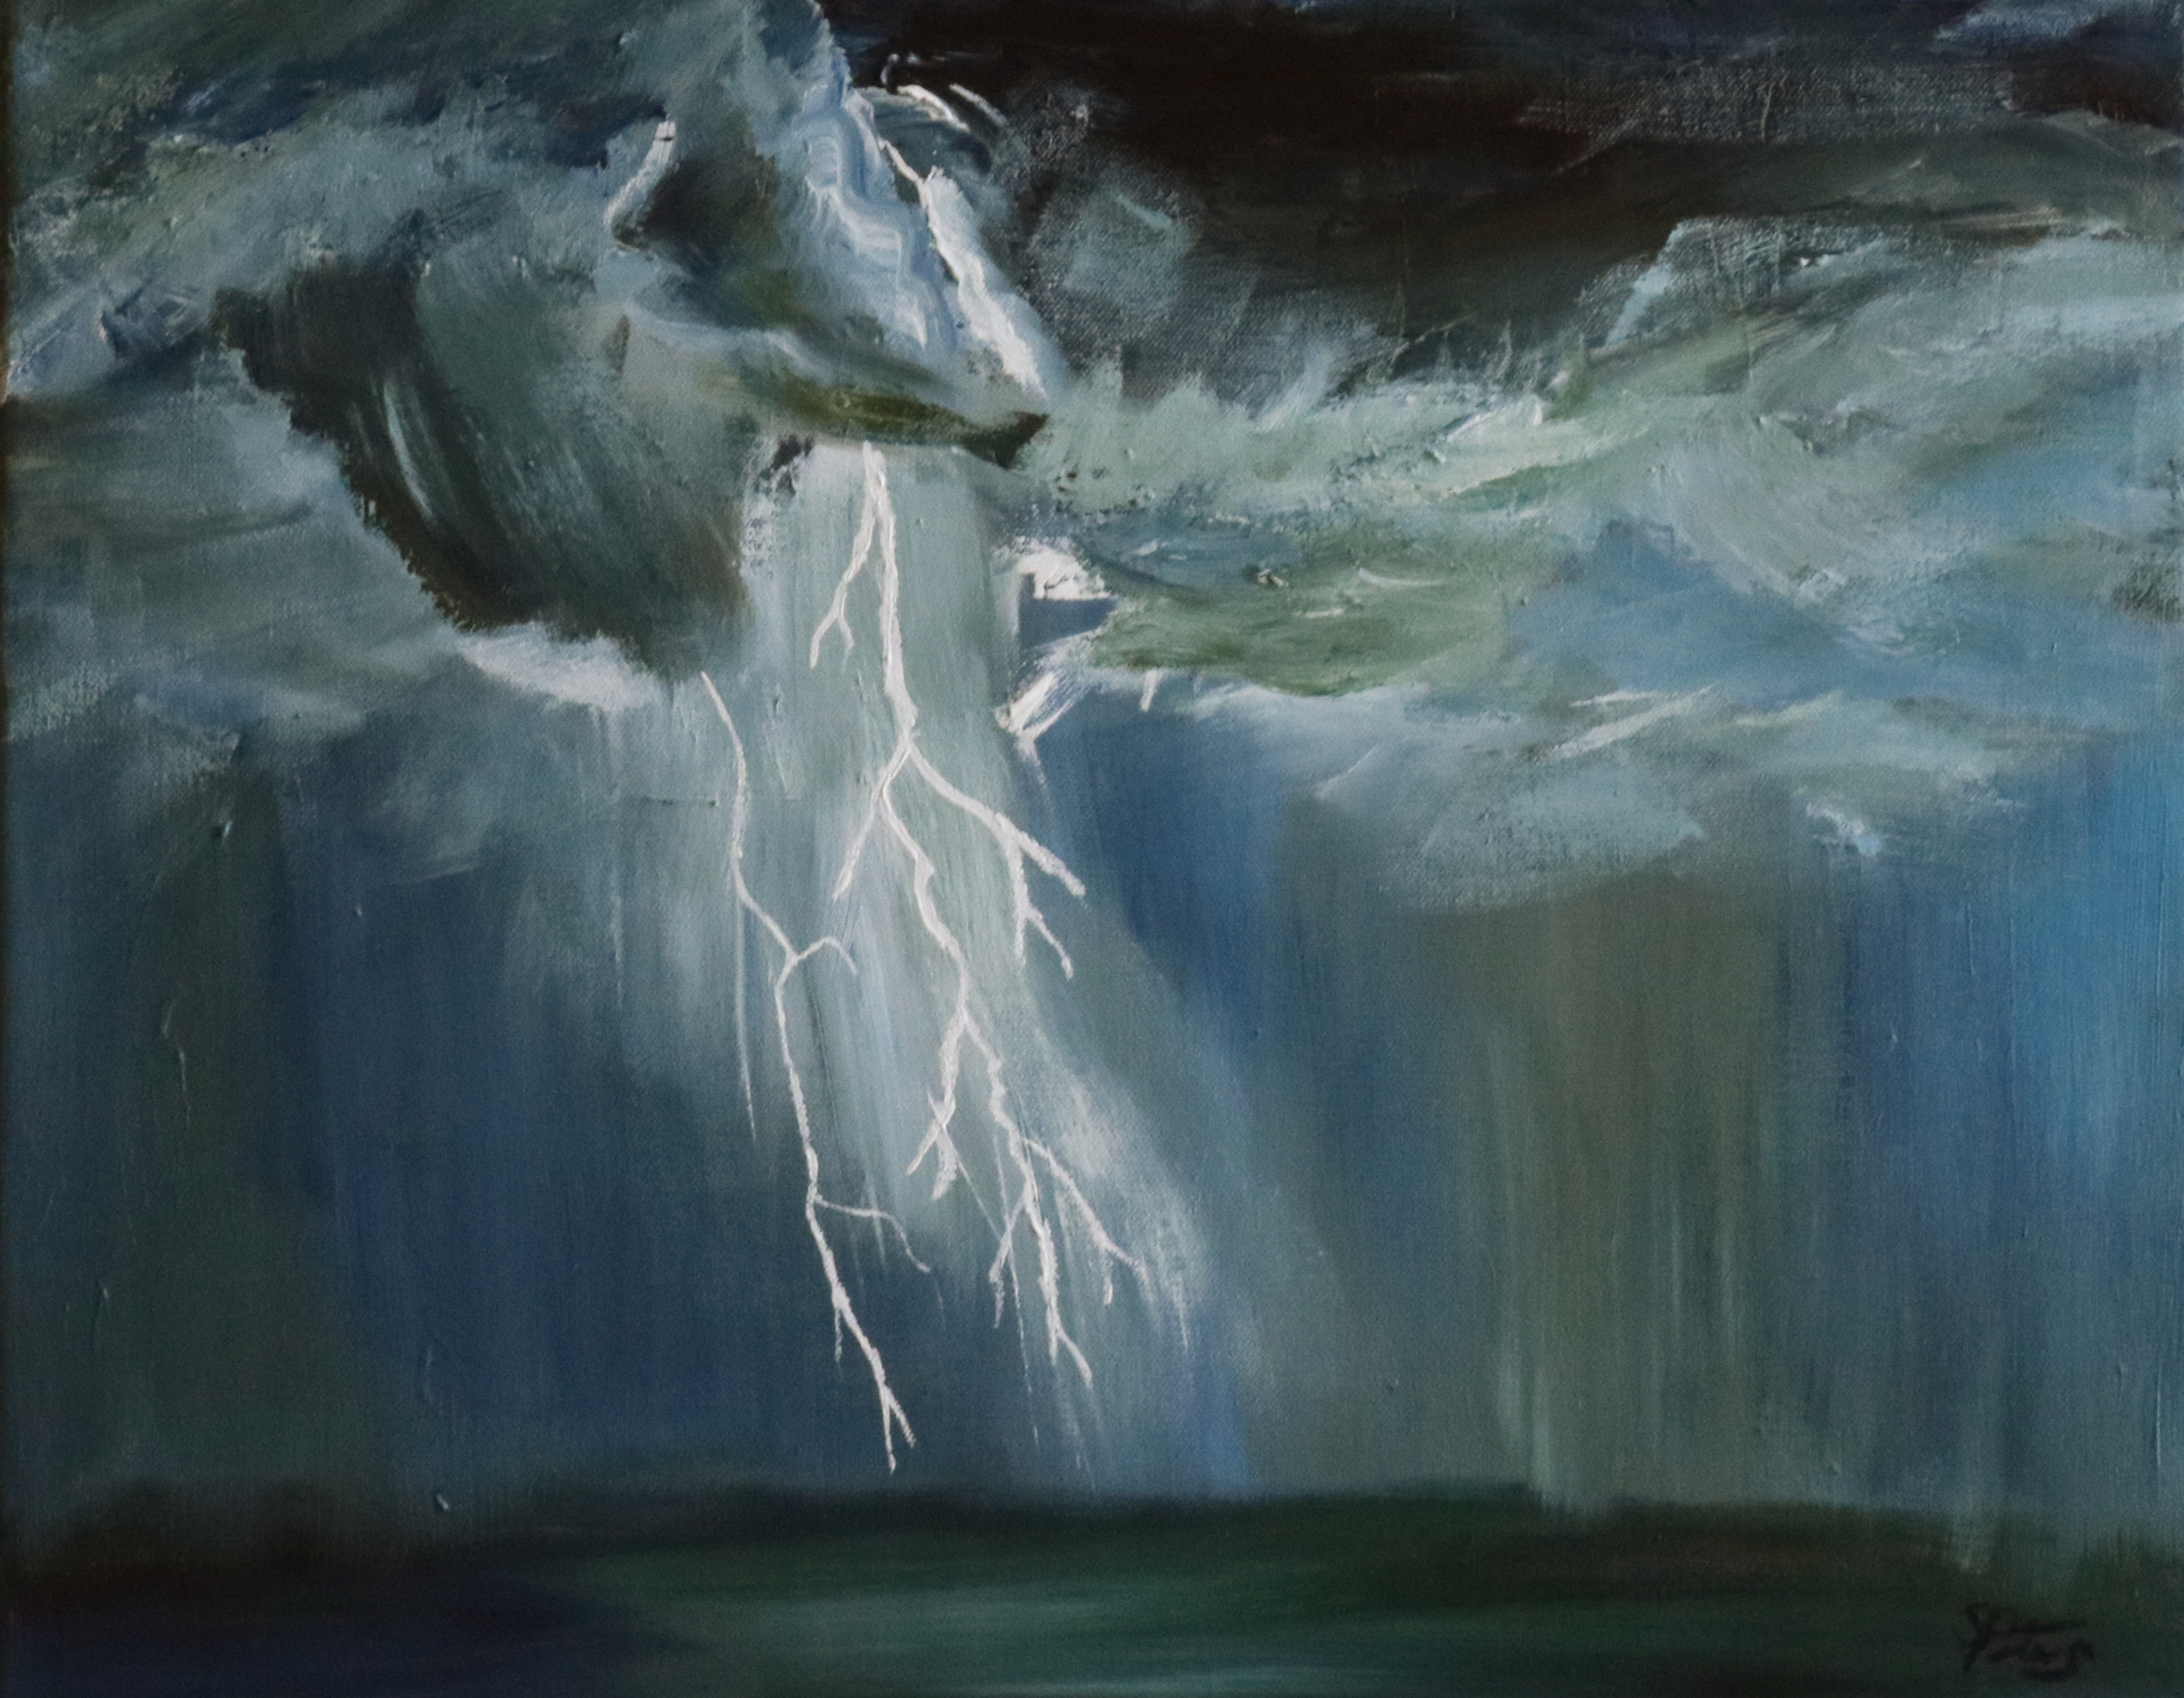 Nature's Symphony - Lightning storm over ocean